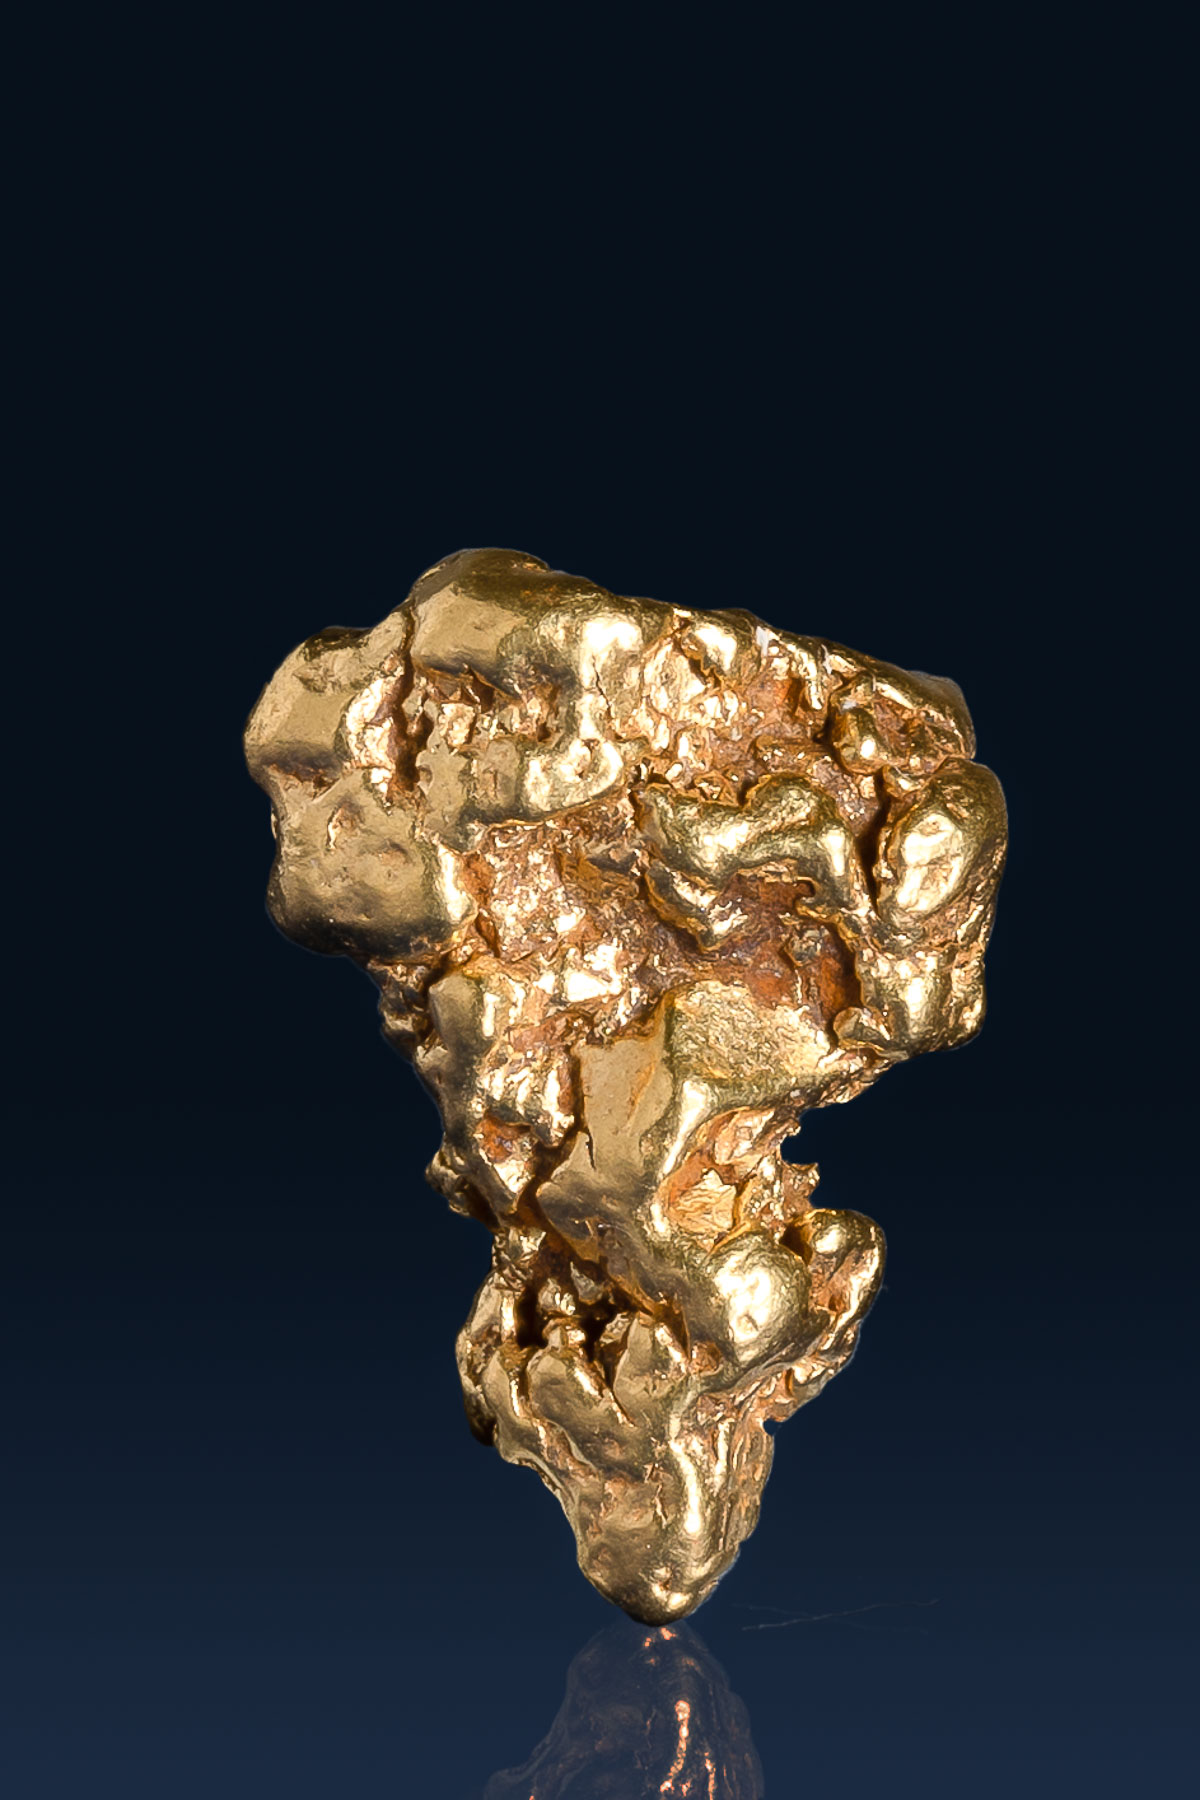 Oblong Large Head Yukon Natural Gold Nugget - 7.33 grams